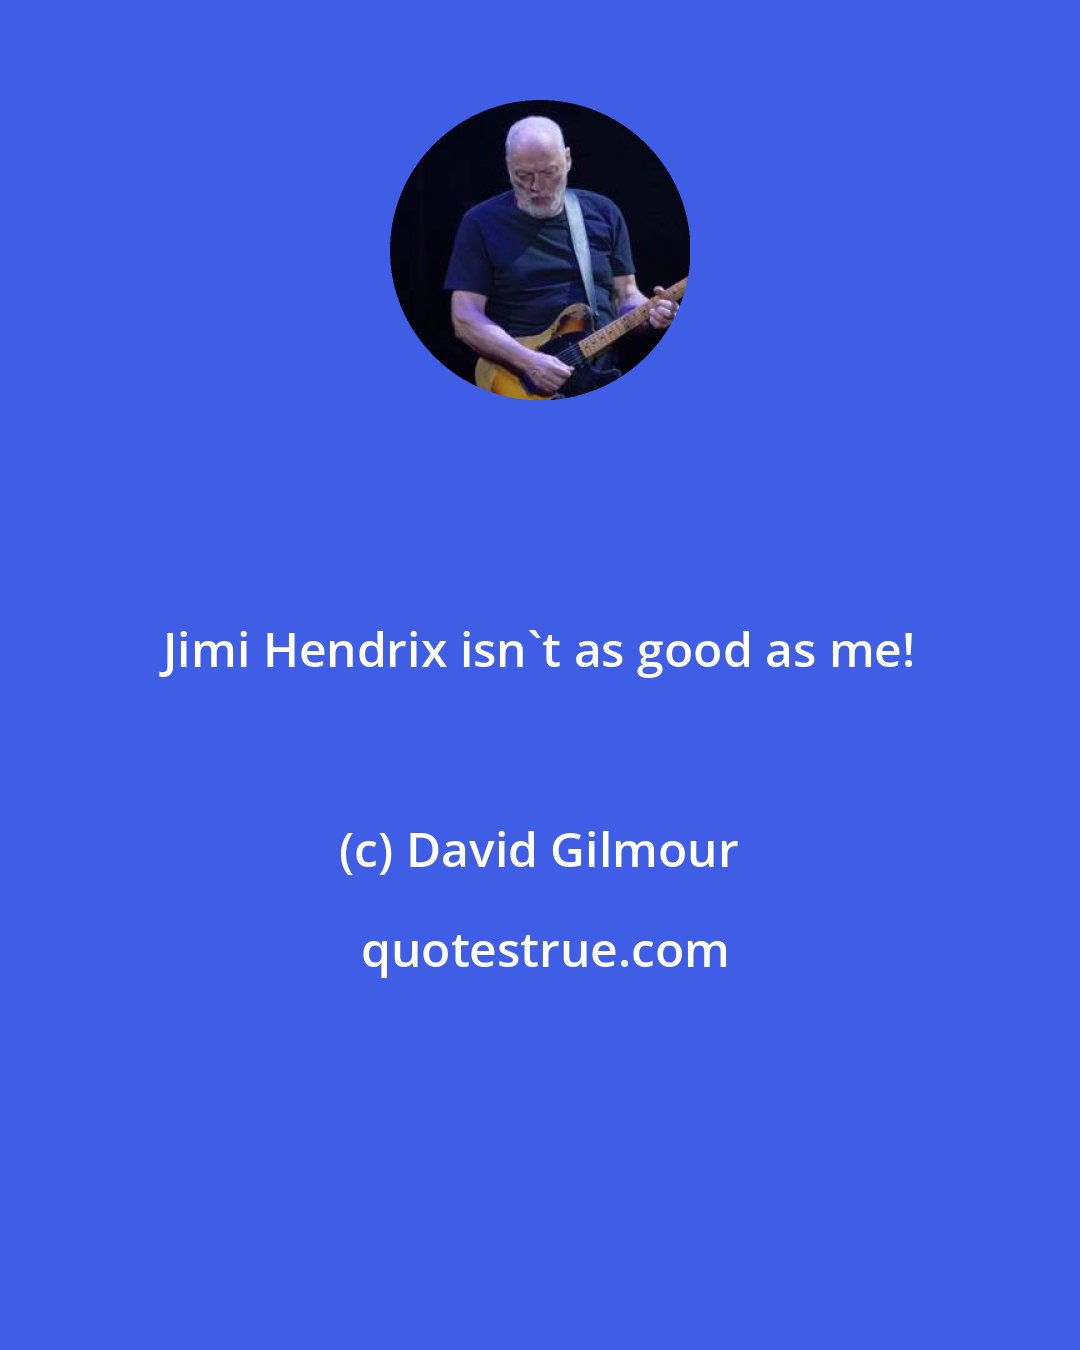 David Gilmour: Jimi Hendrix isn't as good as me!